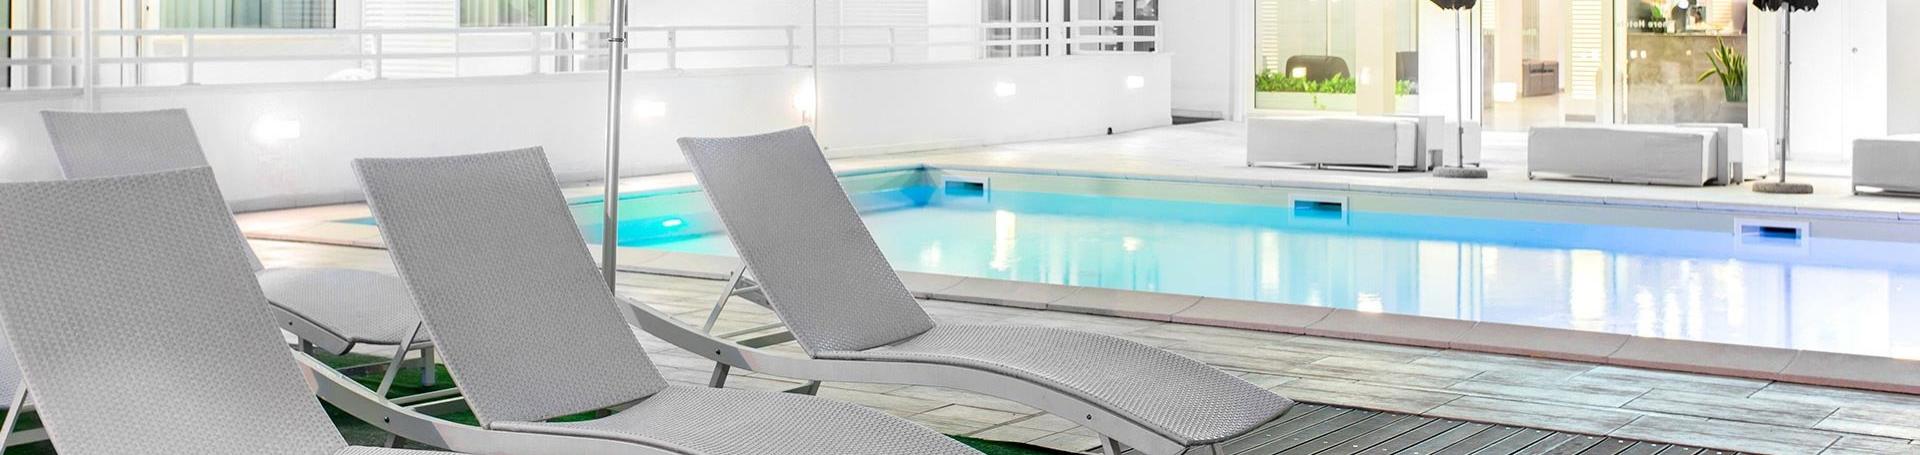 hotelmokambo it pfingsten-2018-urlaub-hotel-mit-swwiming-pool 009